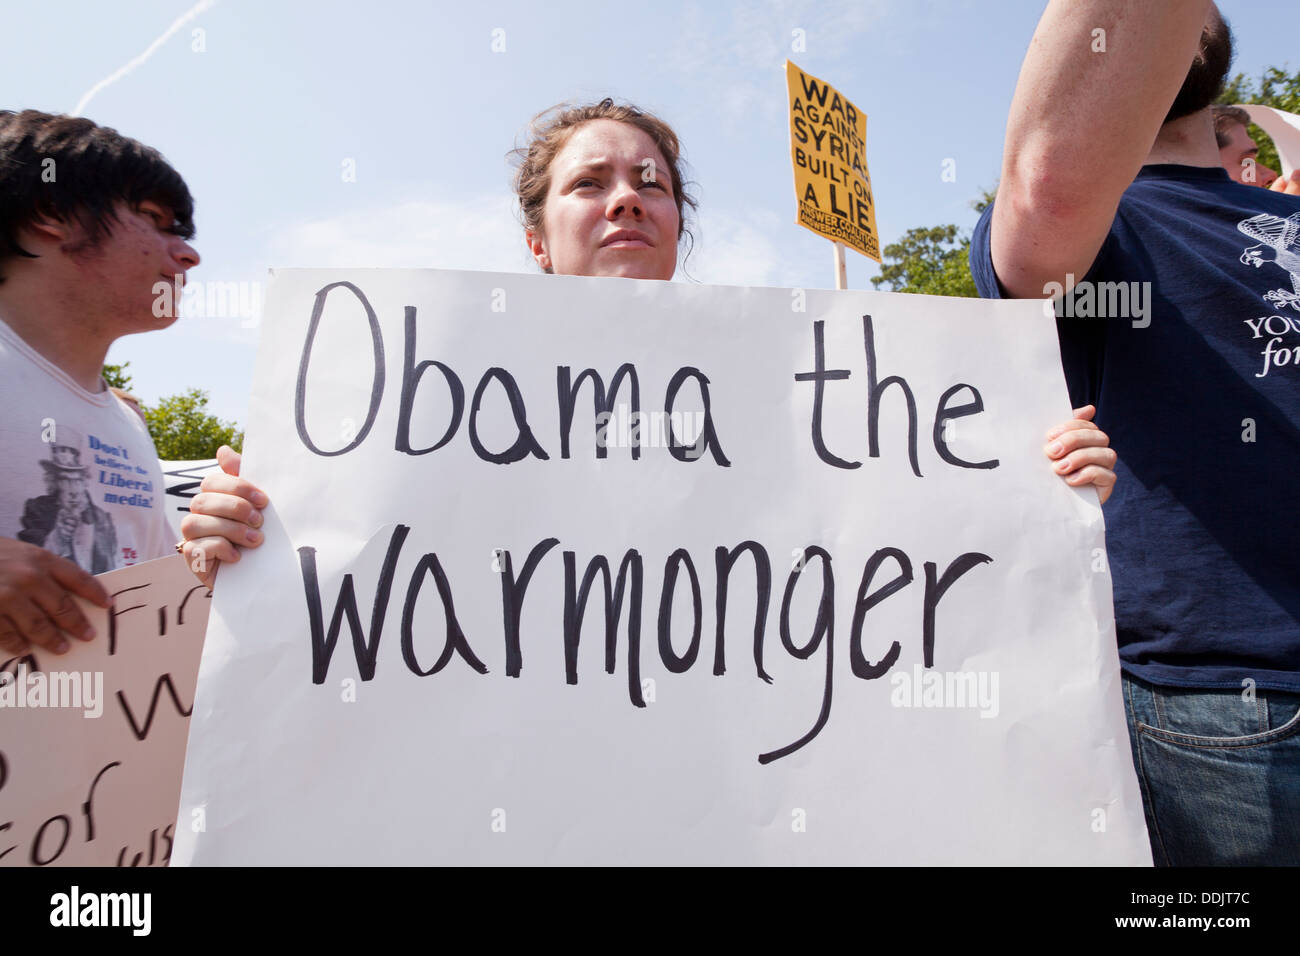 Obama's foreign policy opponent - Washington, DC USA Stock Photo